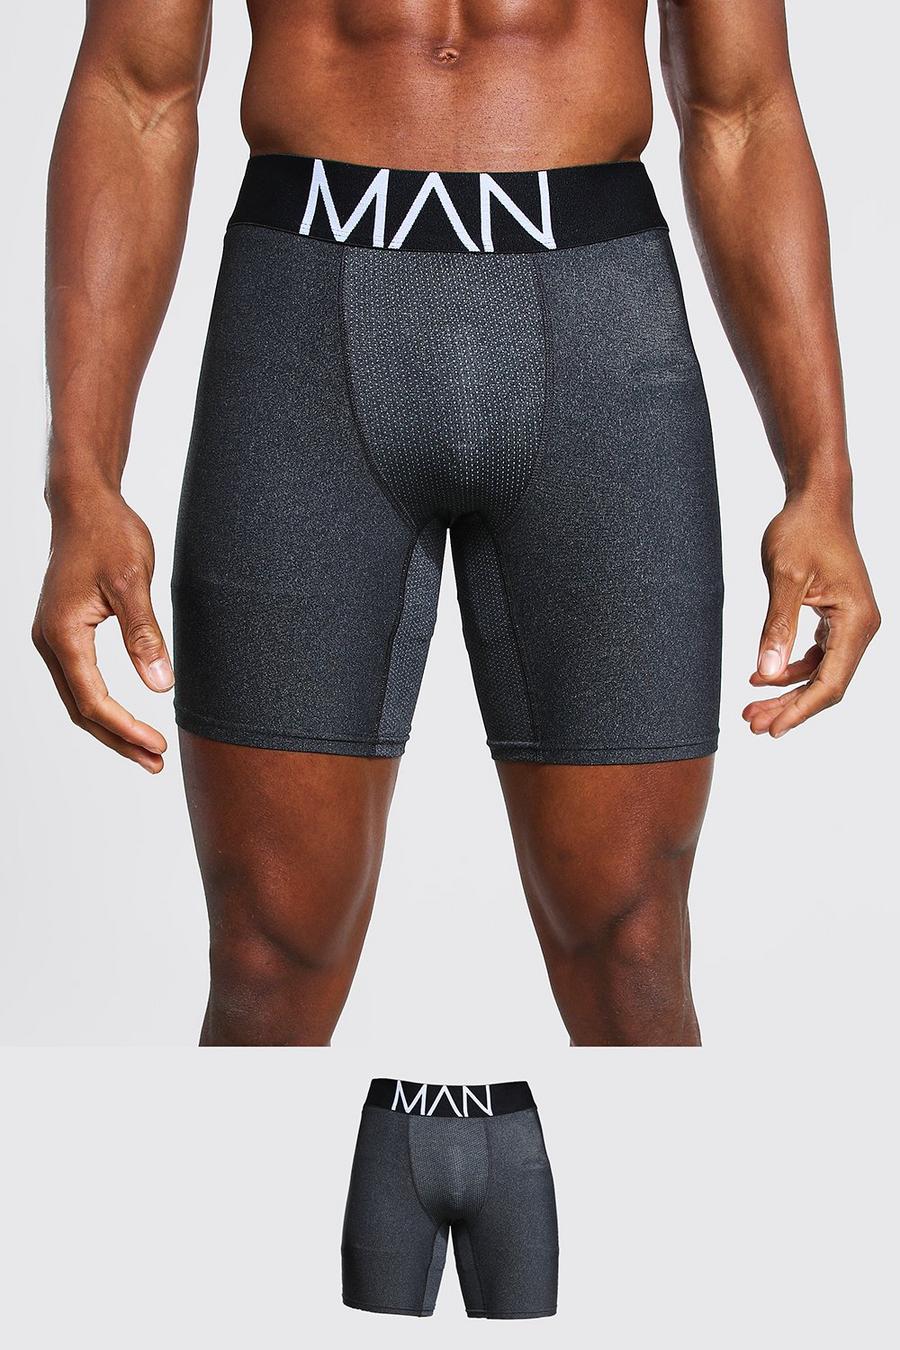 Men's Compression Clothing, Men's Compression Shorts